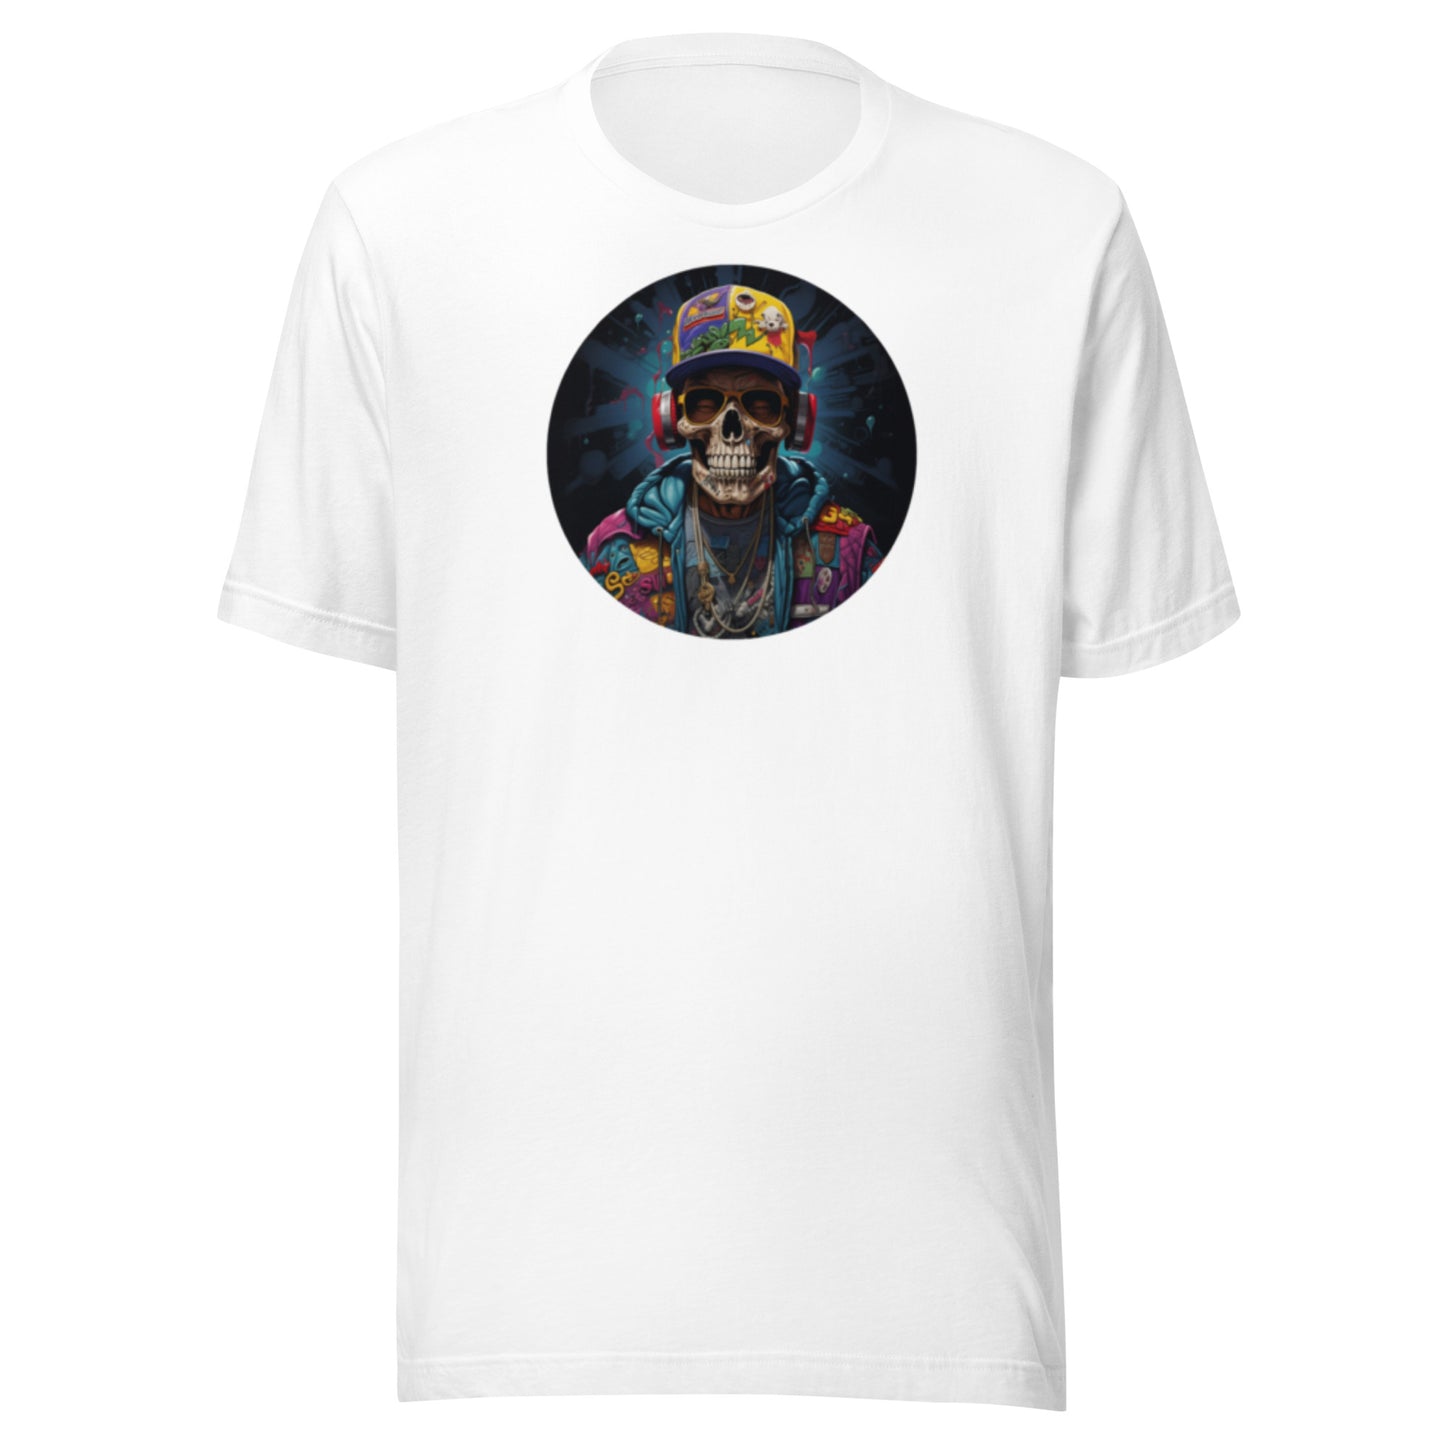 Skeleton Shirt, Hip Hop Shirt for Music Lovers, Scary Rapper Shirt, Soft Cotton Graphic Shirt, Summer Short Sleeve Shirt